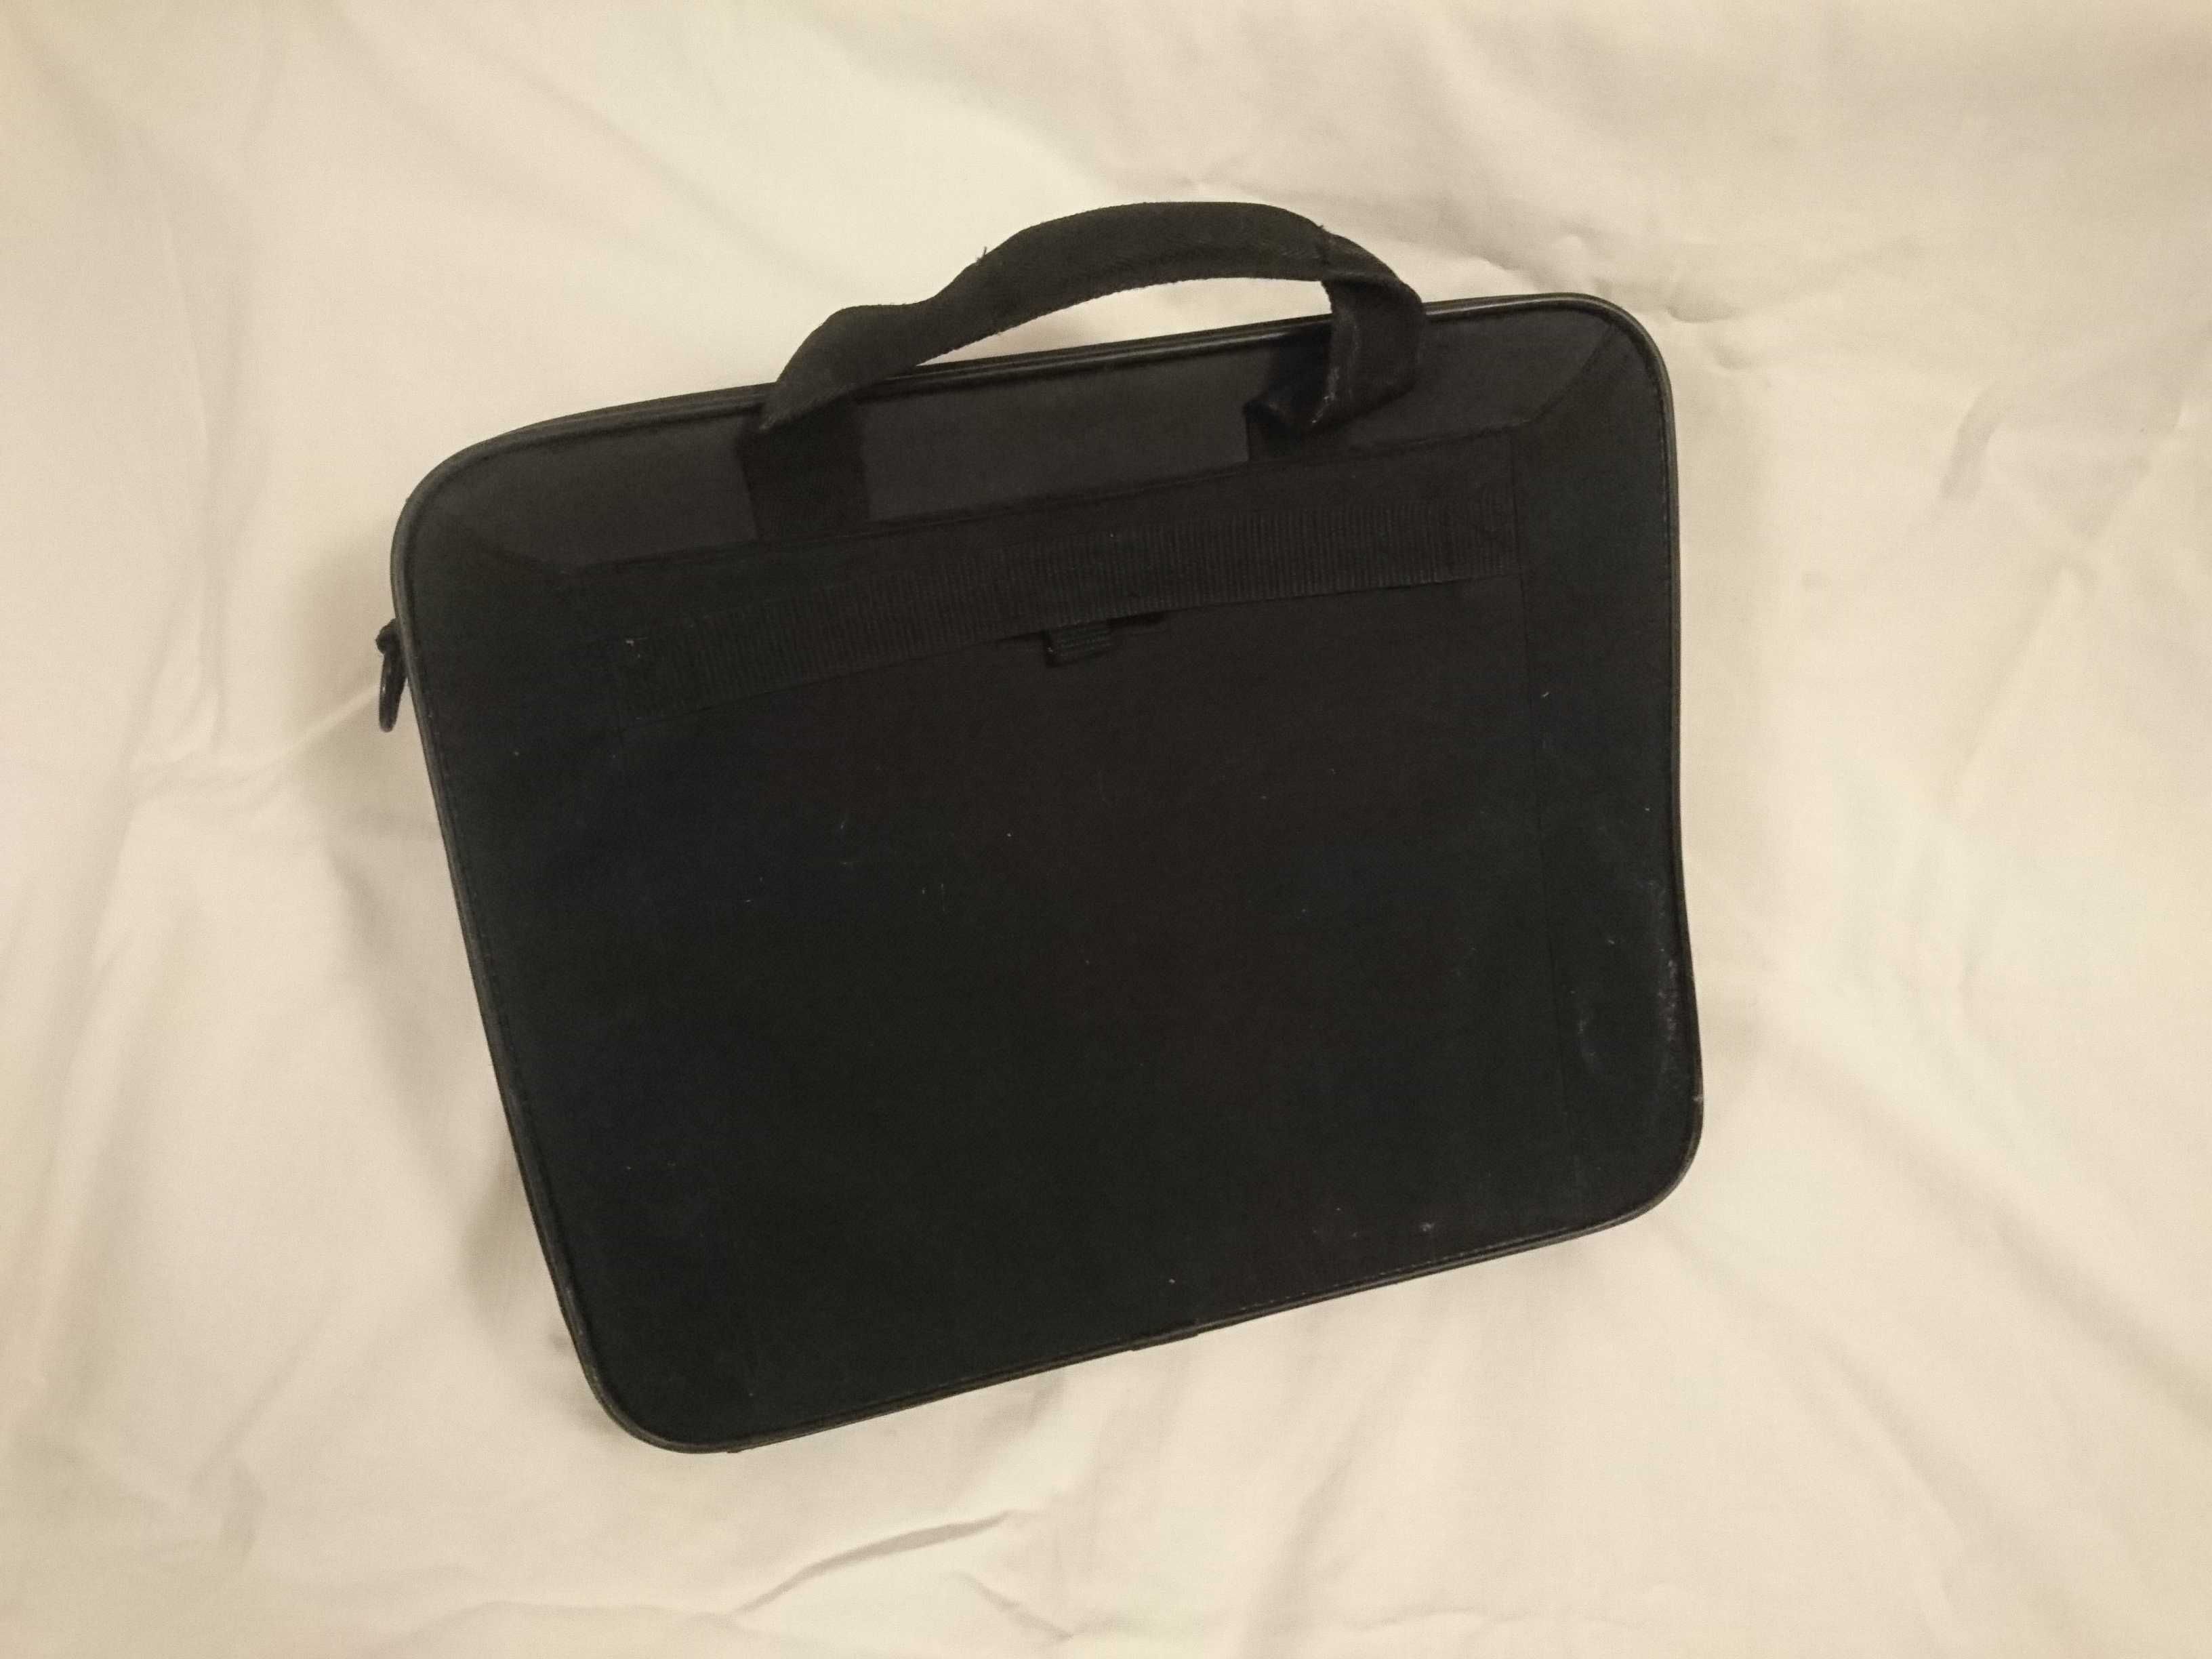 torba na laptopa - czarna - jak nowa!